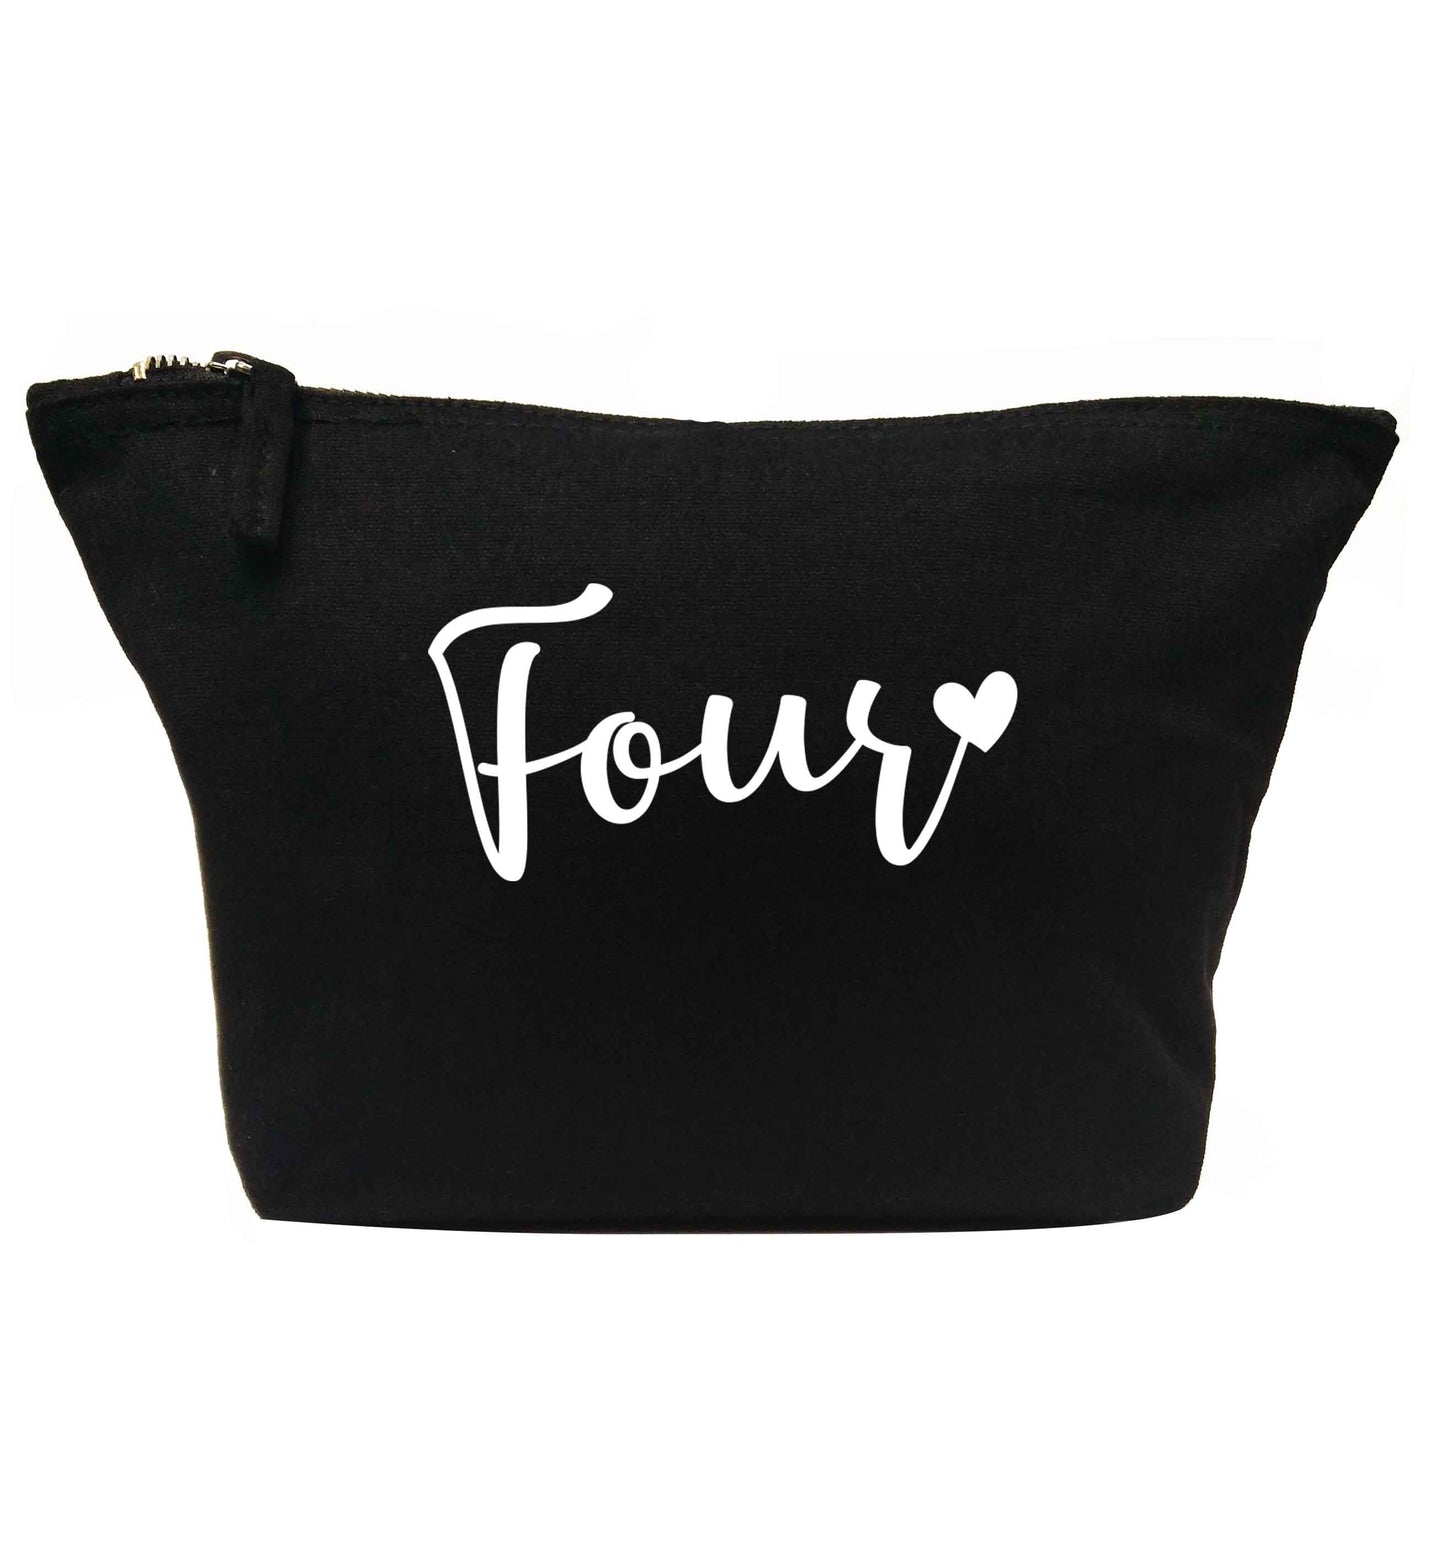 Four and heart | Makeup / wash bag